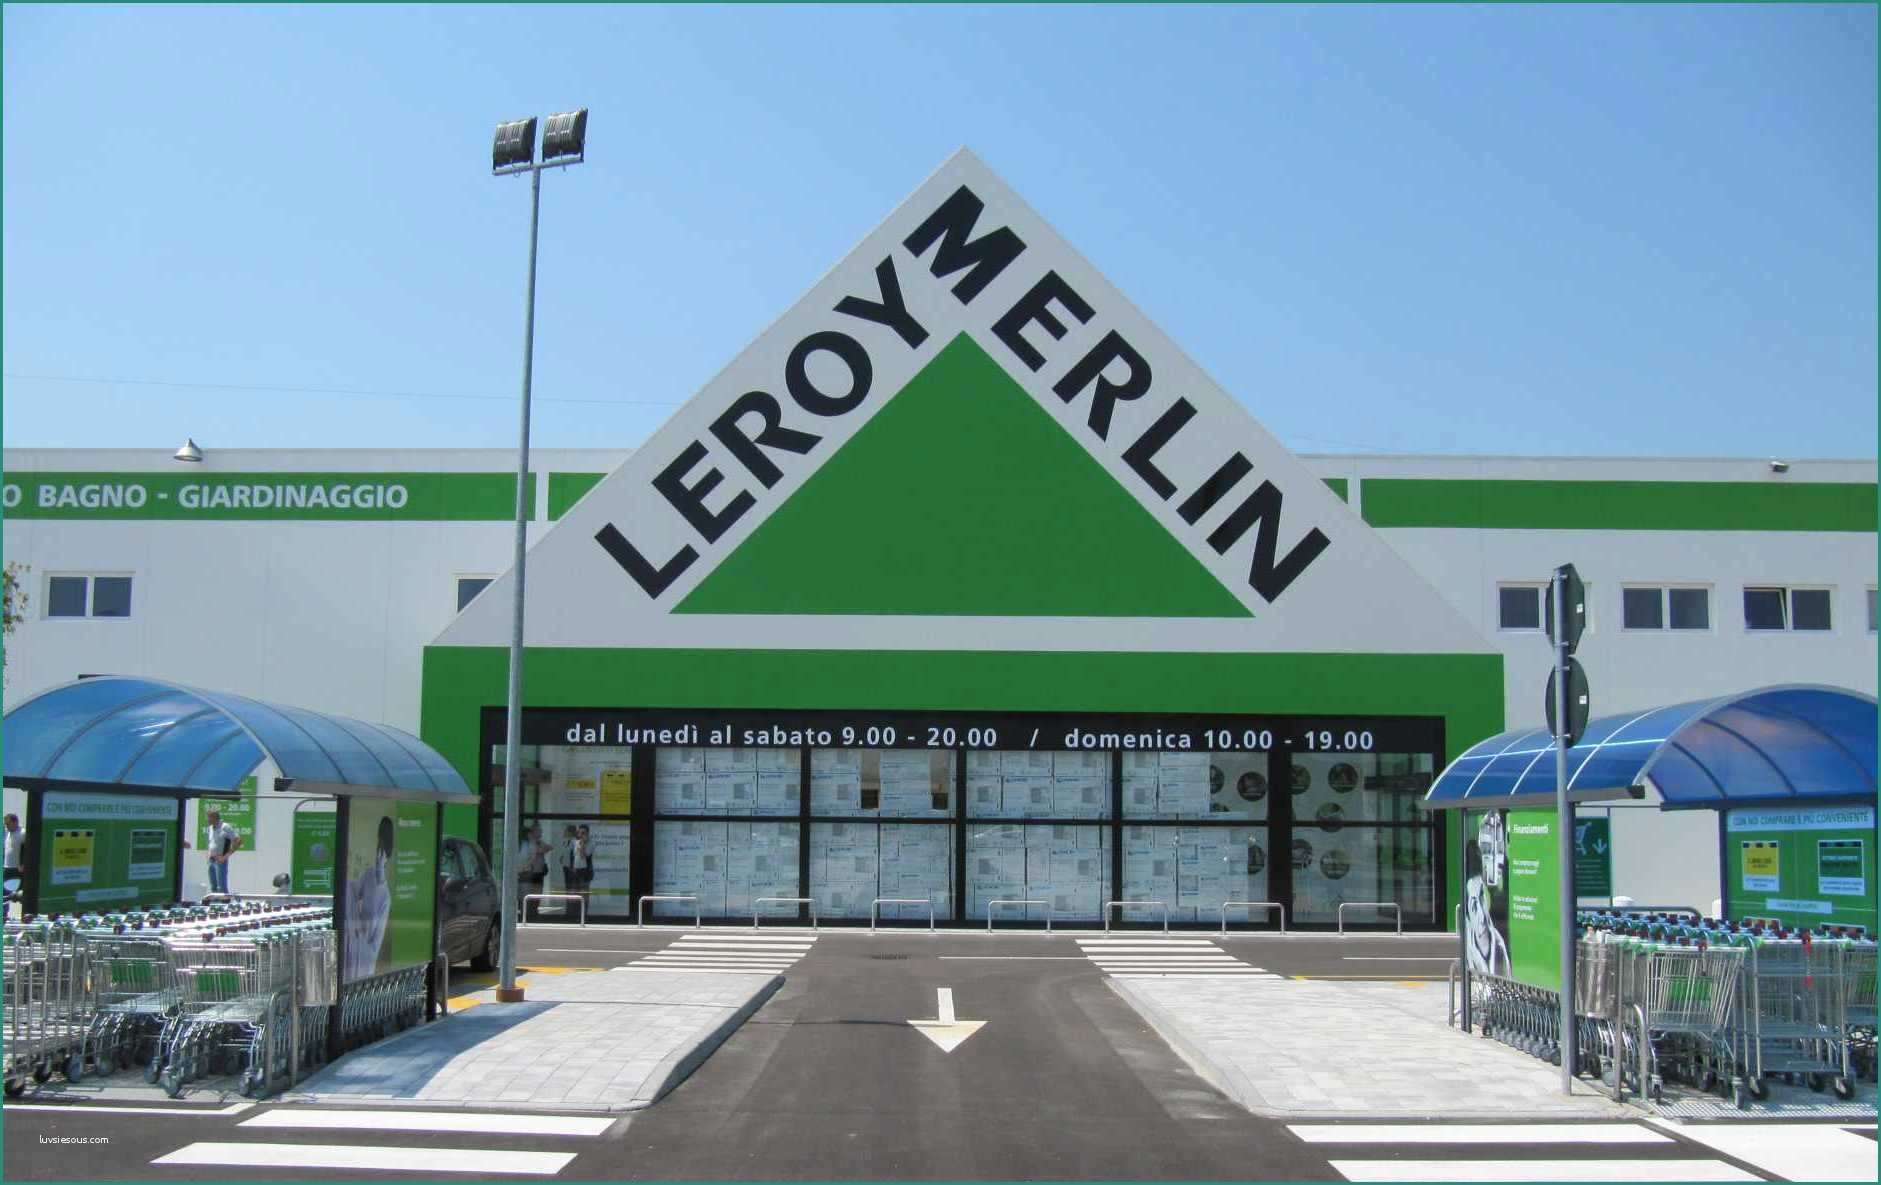 Grigliato Leroy Merlin E Arco Jardin Leroy Merlin De Madera Leroy Merlin Affordable De